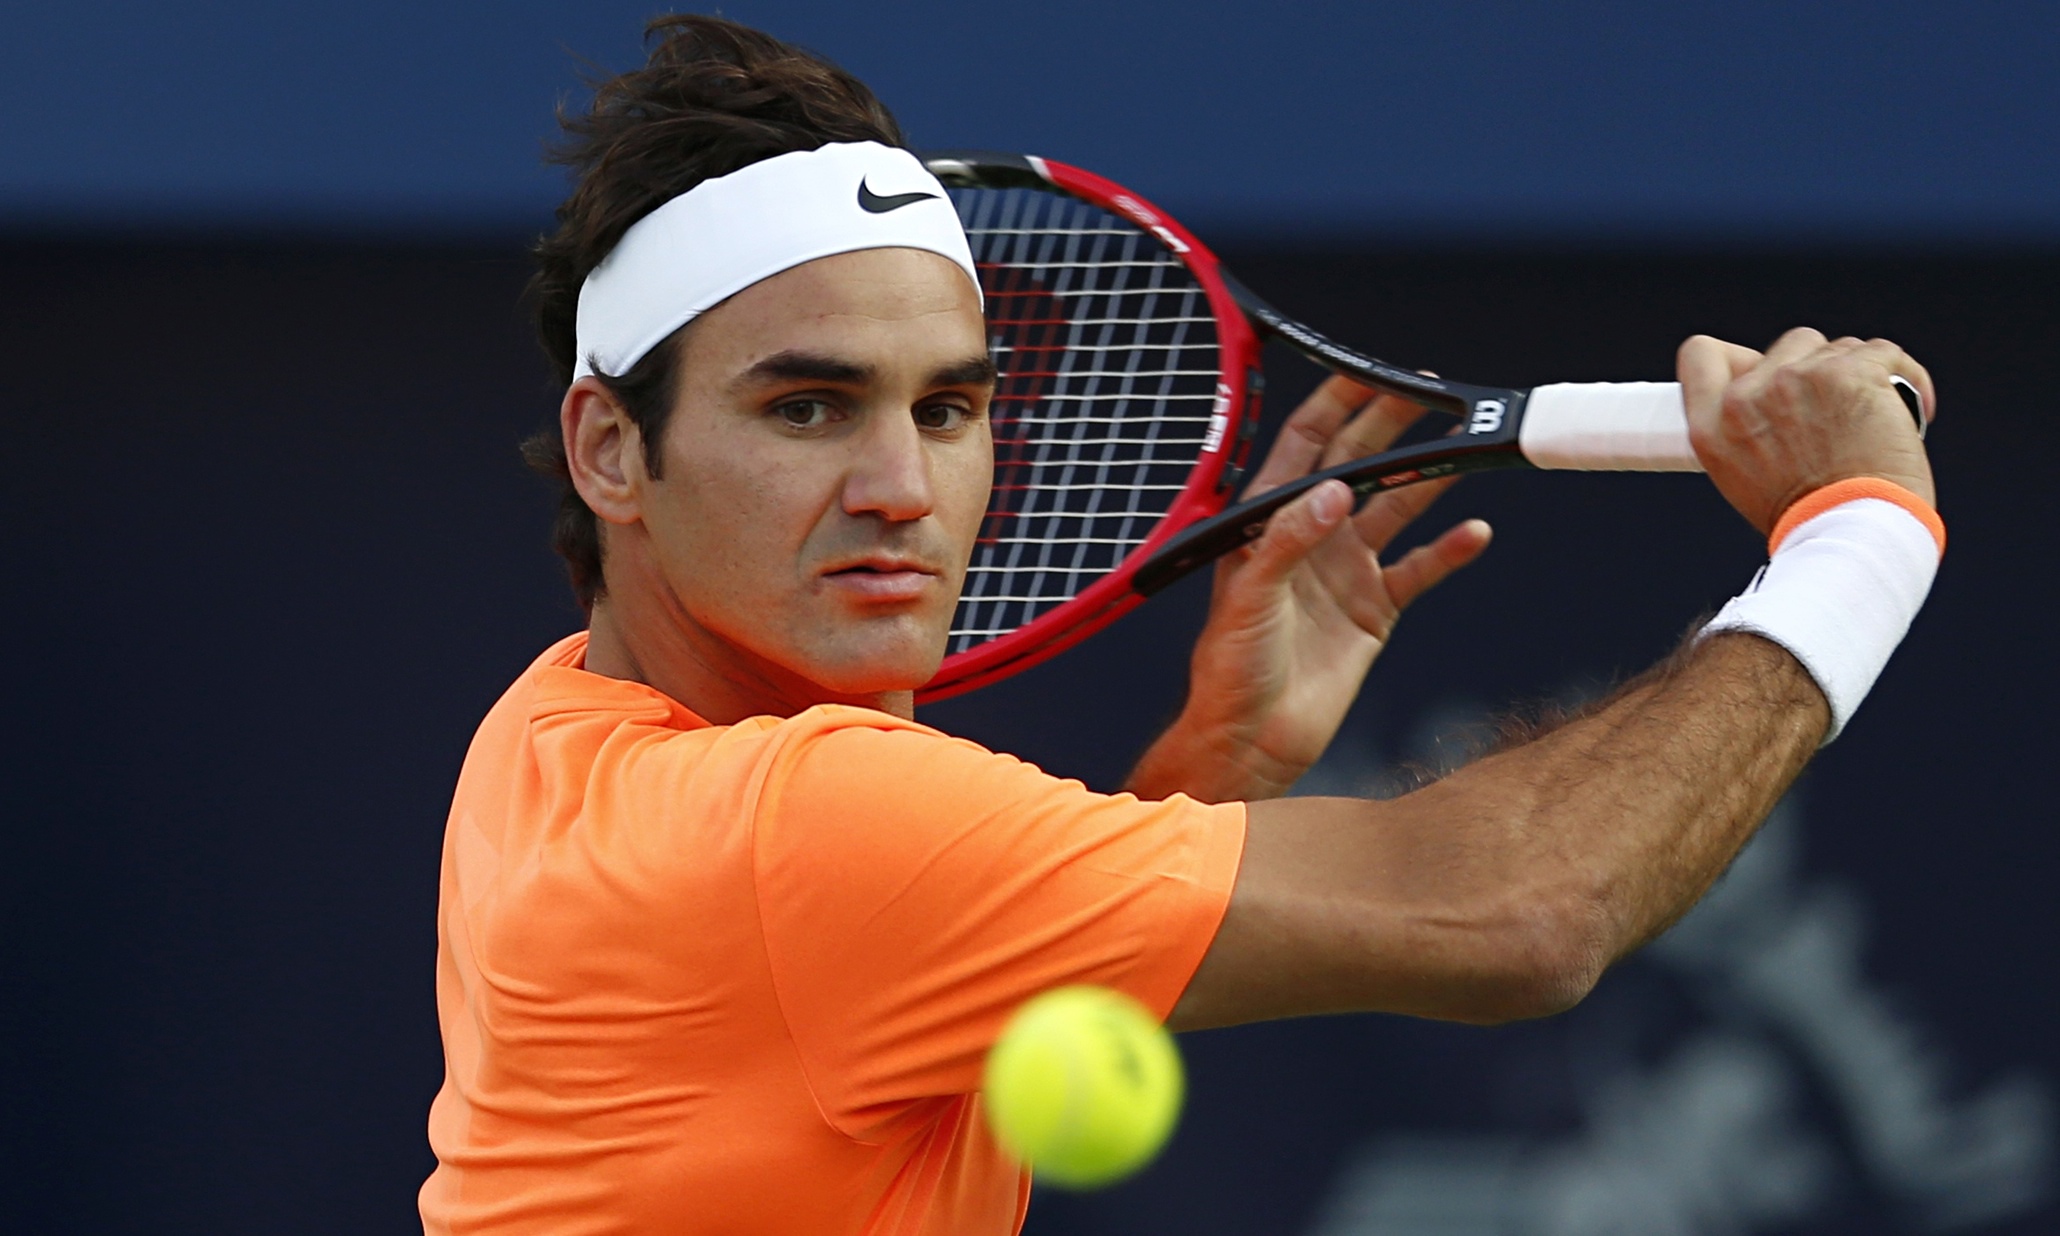 Roger Federer in action against Borna Coric